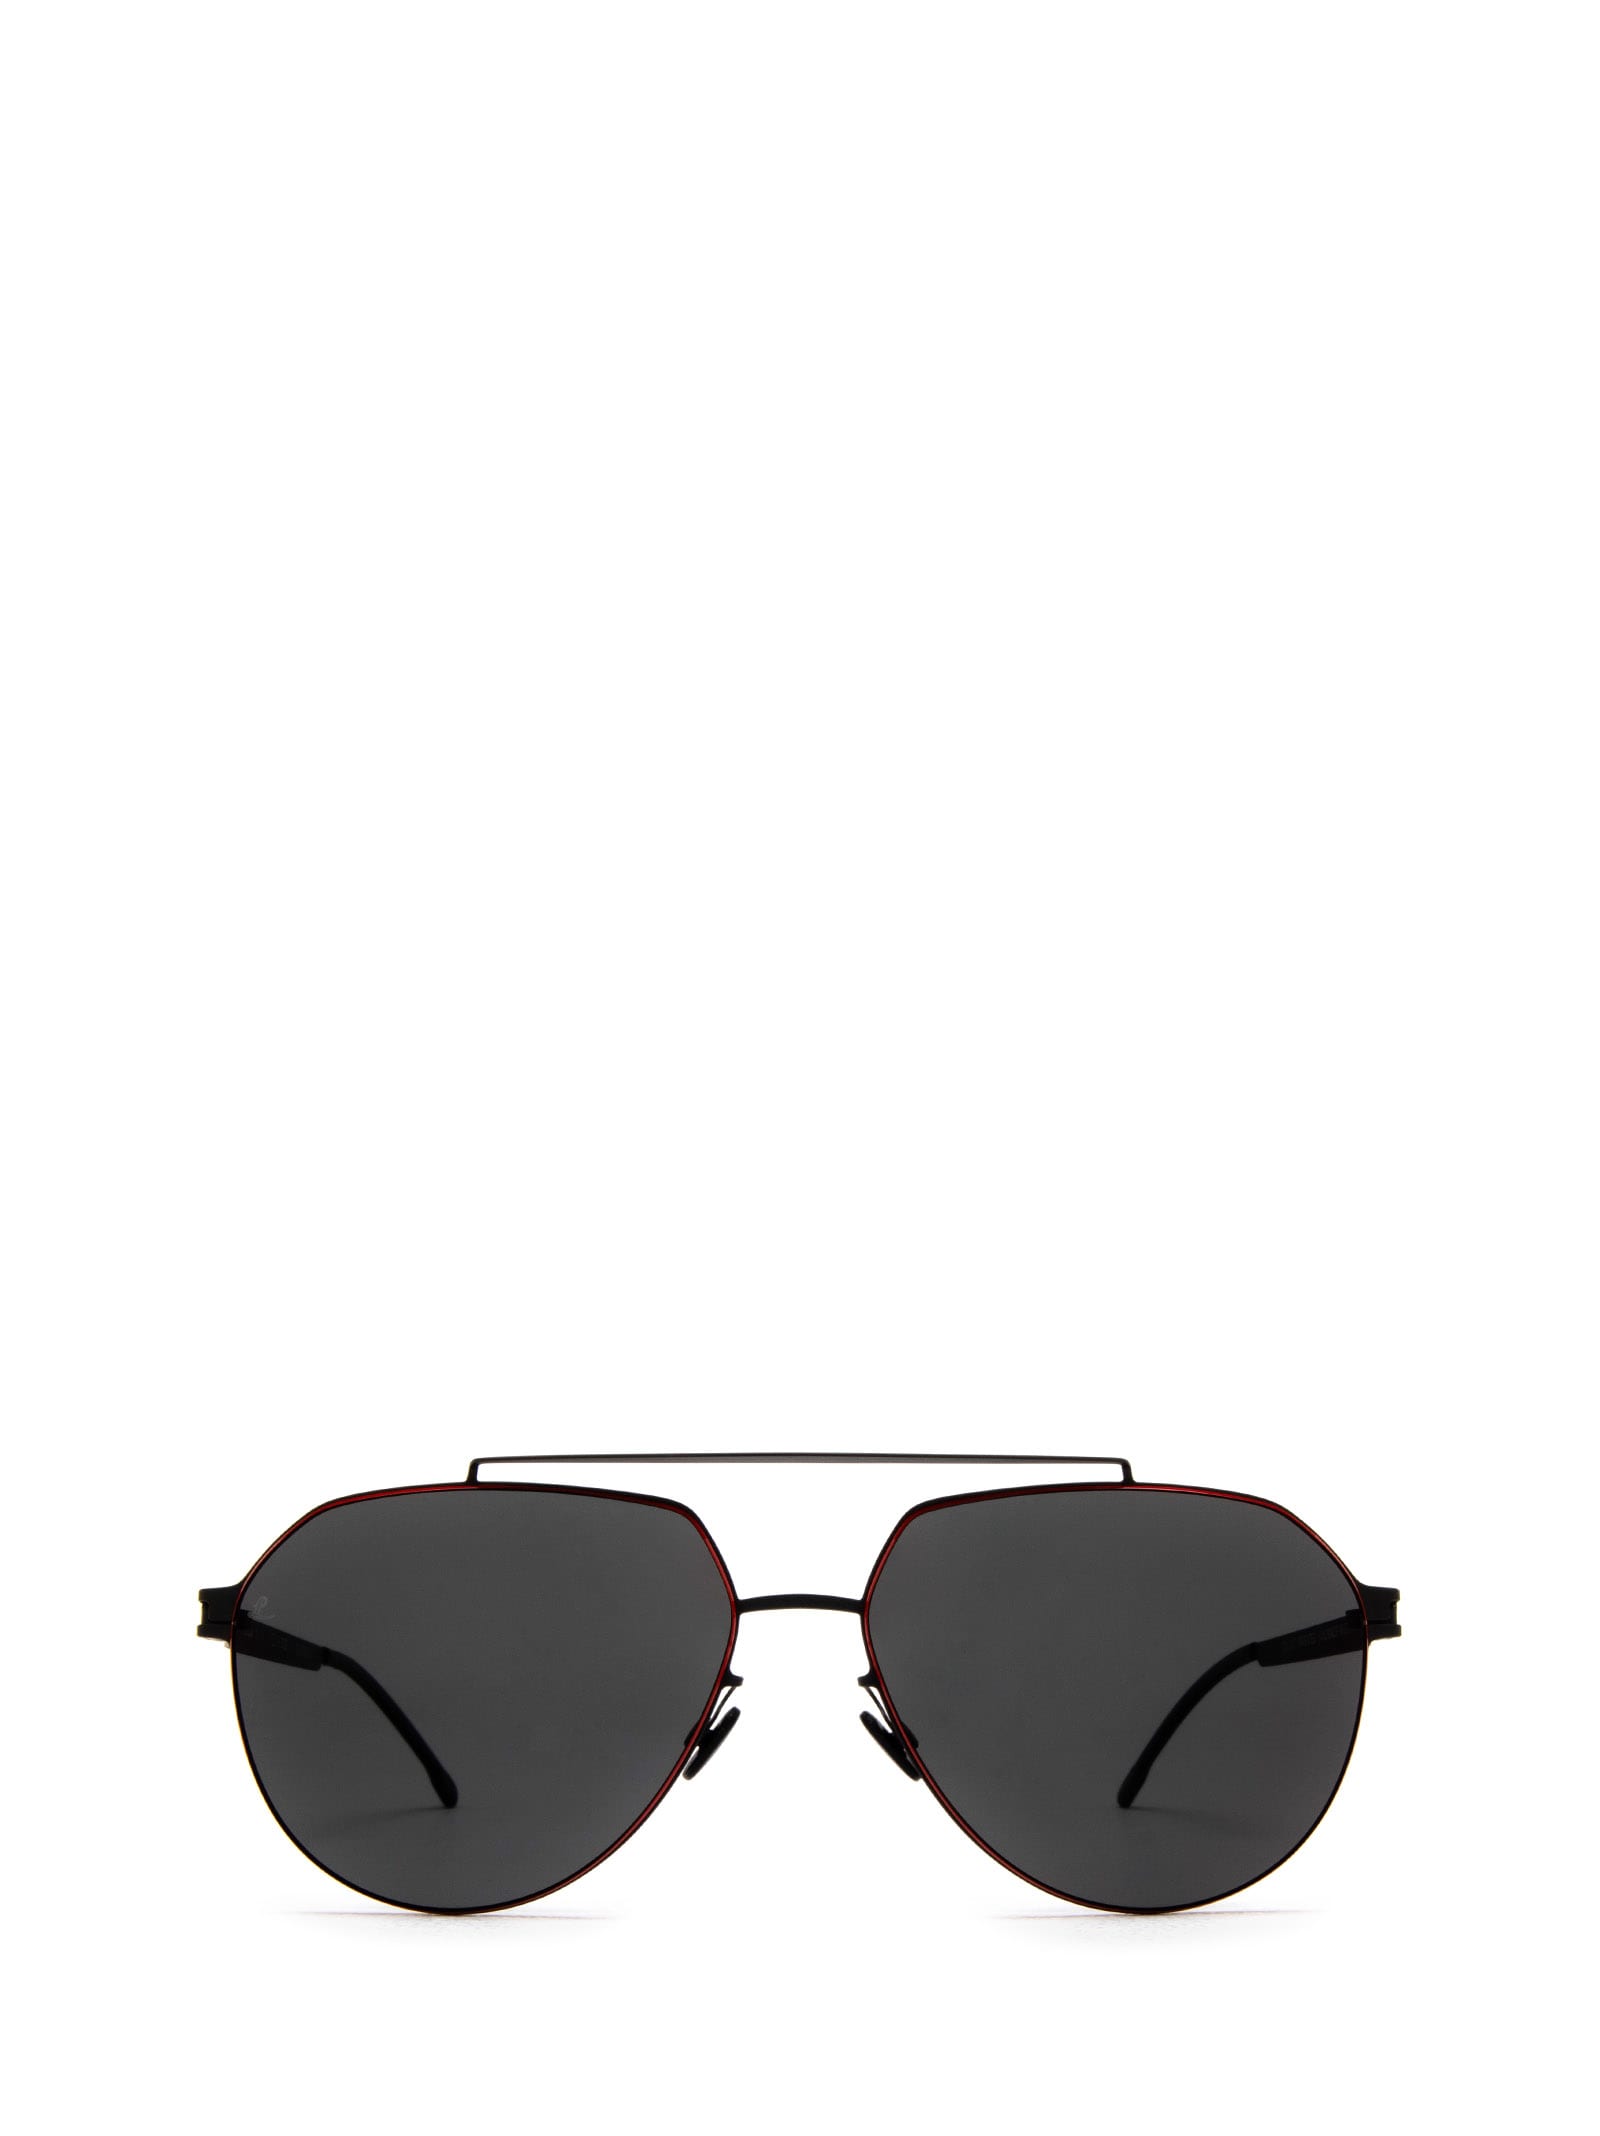 Shop Mykita Ml13 Sun Black Sunglasses